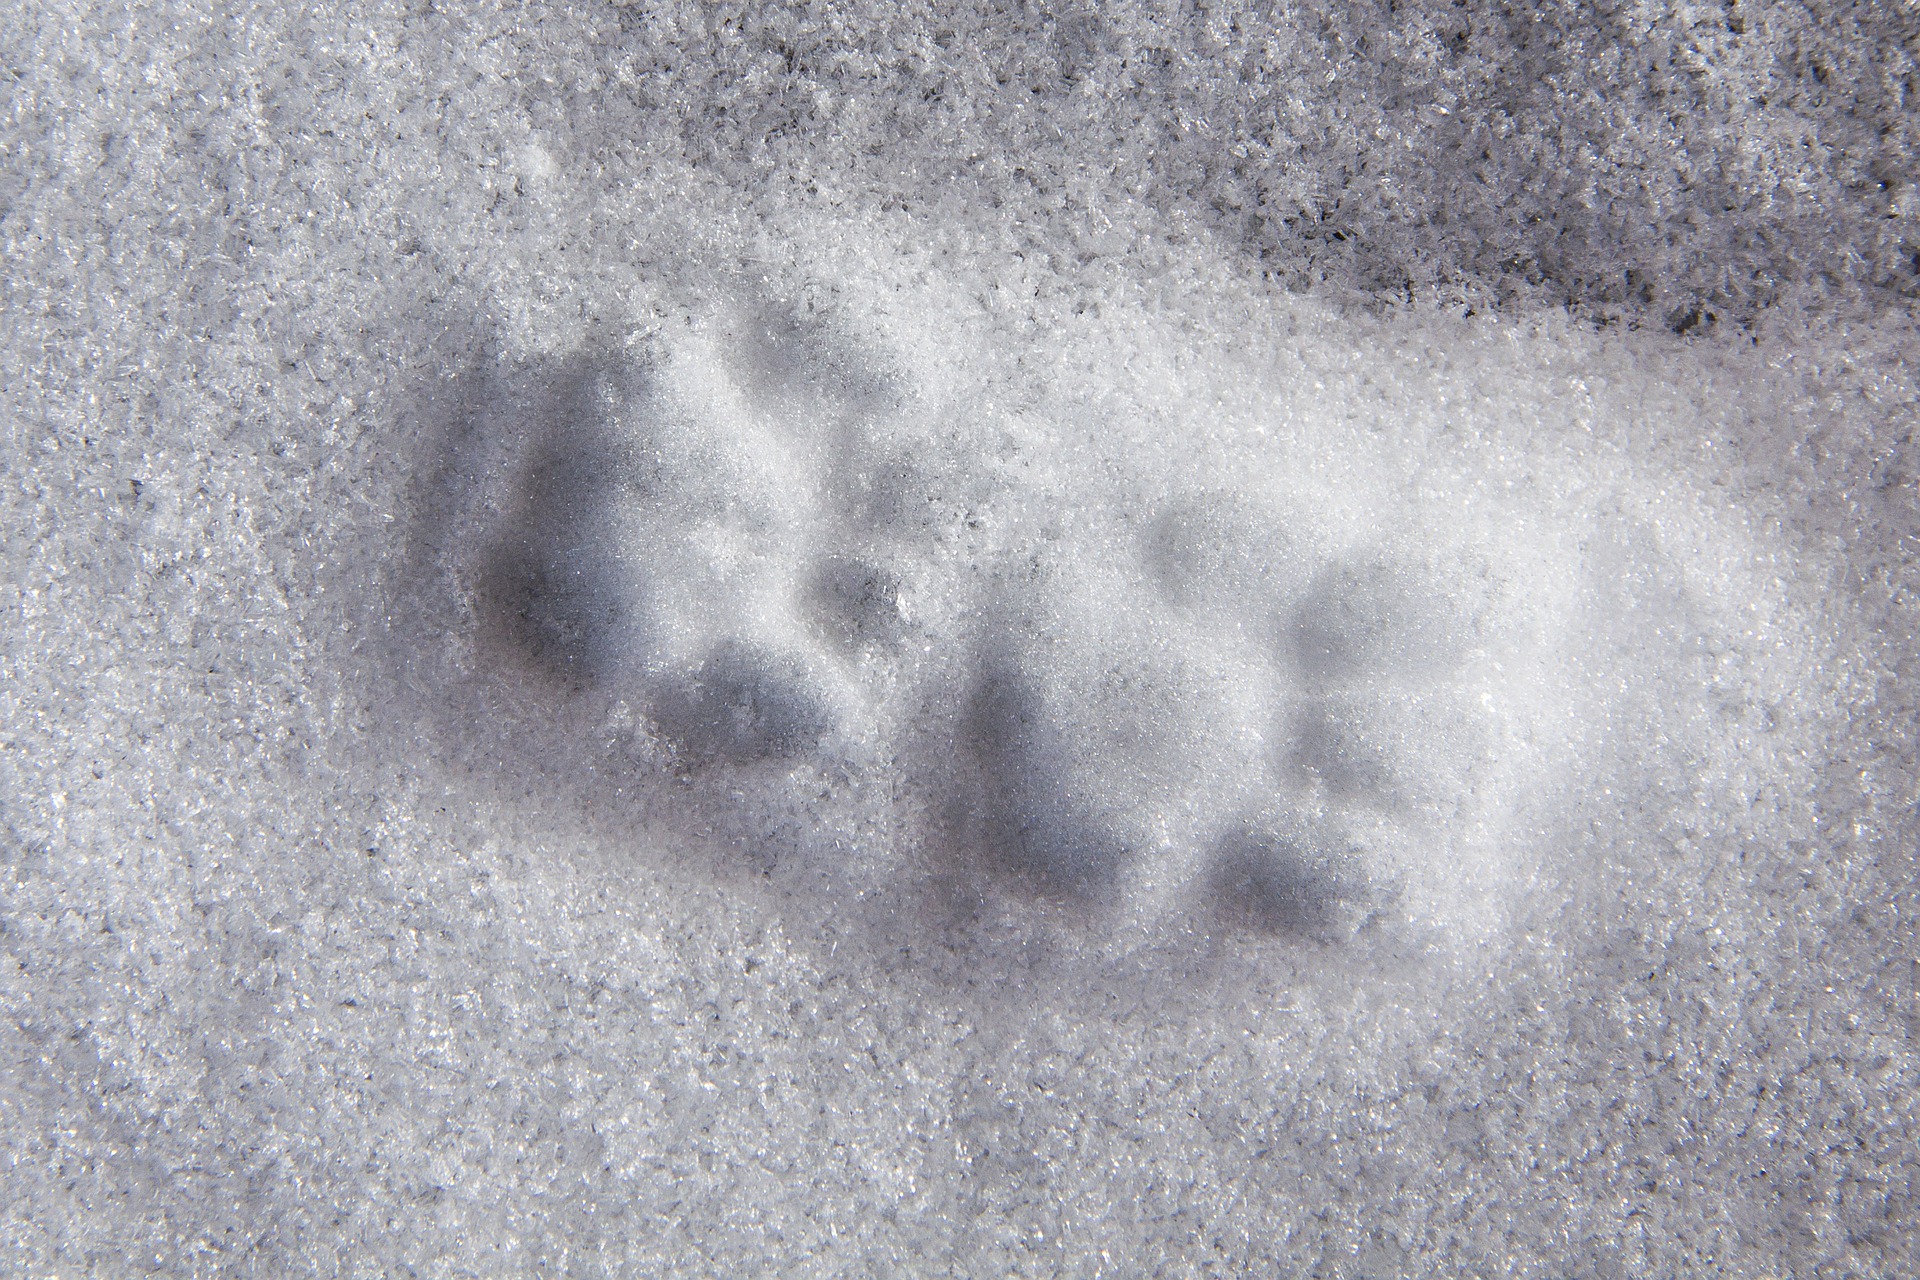 Animal tracks in snow photo